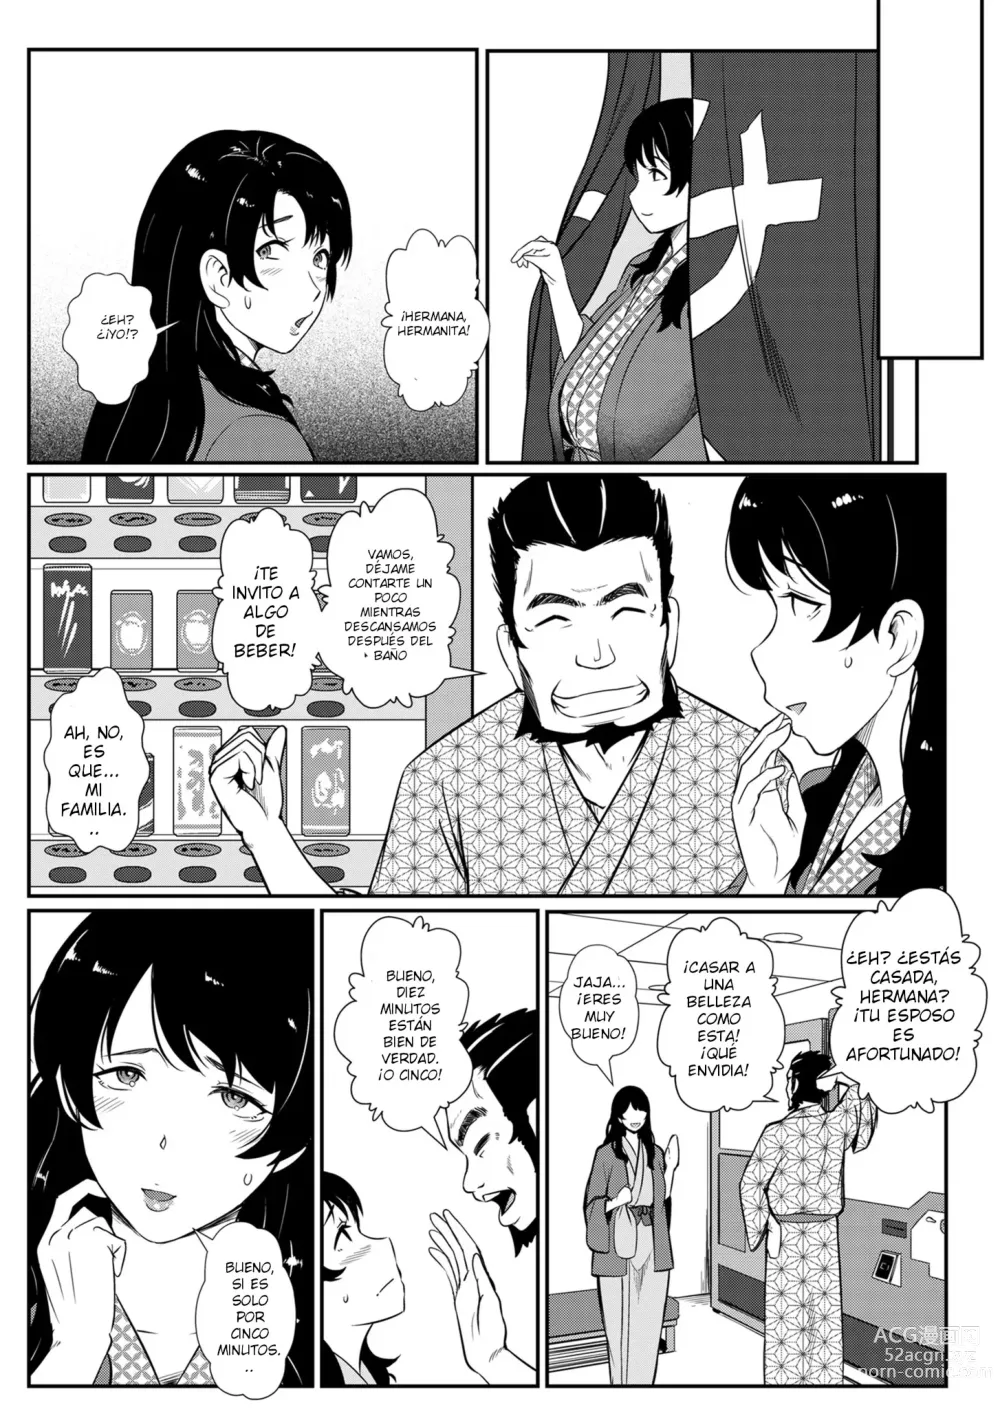 Page 6 of manga Haha wa tabi no owari ni...